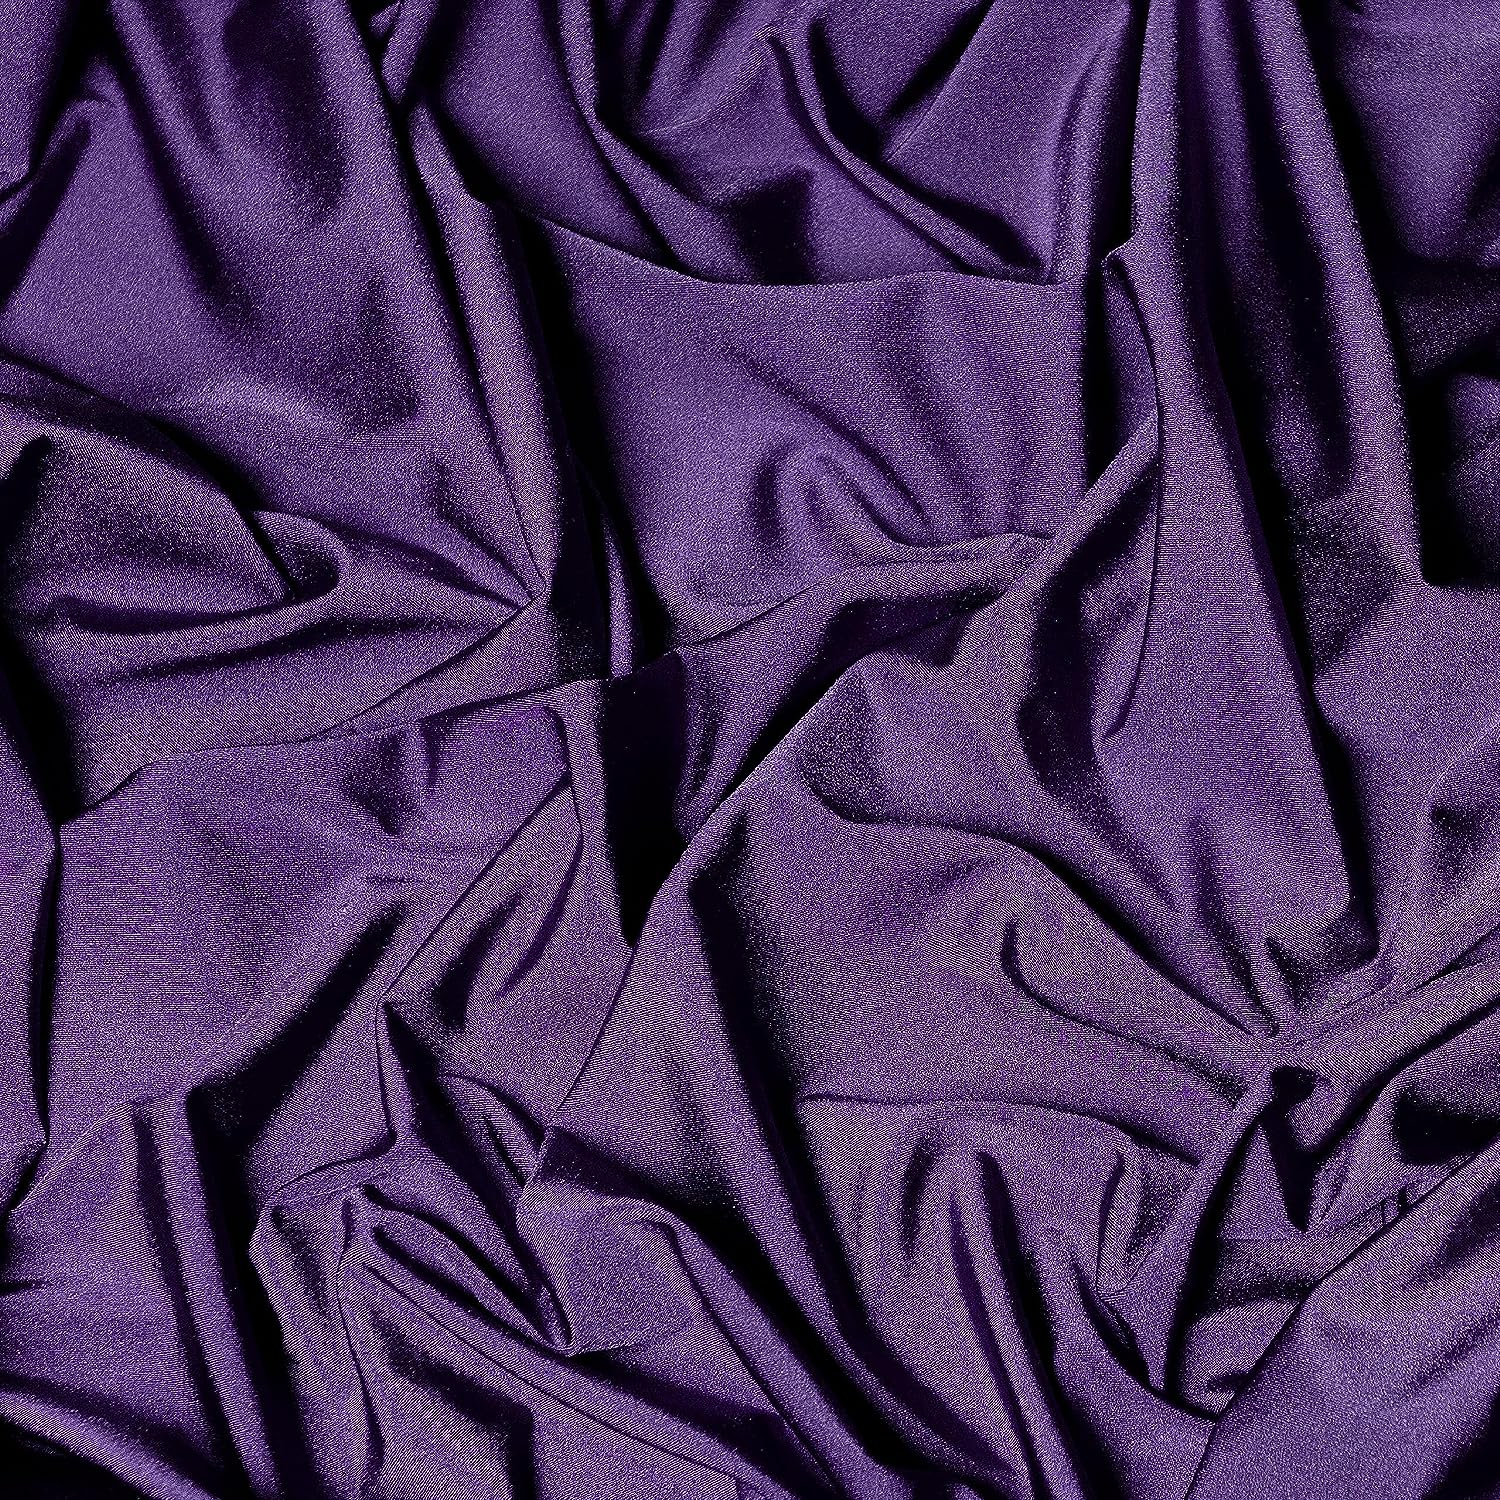 Jordan 4 Way Stretch Fabric Shiny Nylon Spandex PurpleICE FABRICSICE FABRICSBy The Yard (58" Width)Jordan 4 Way Stretch Fabric Shiny Nylon Spandex Purple ICE FABRICS